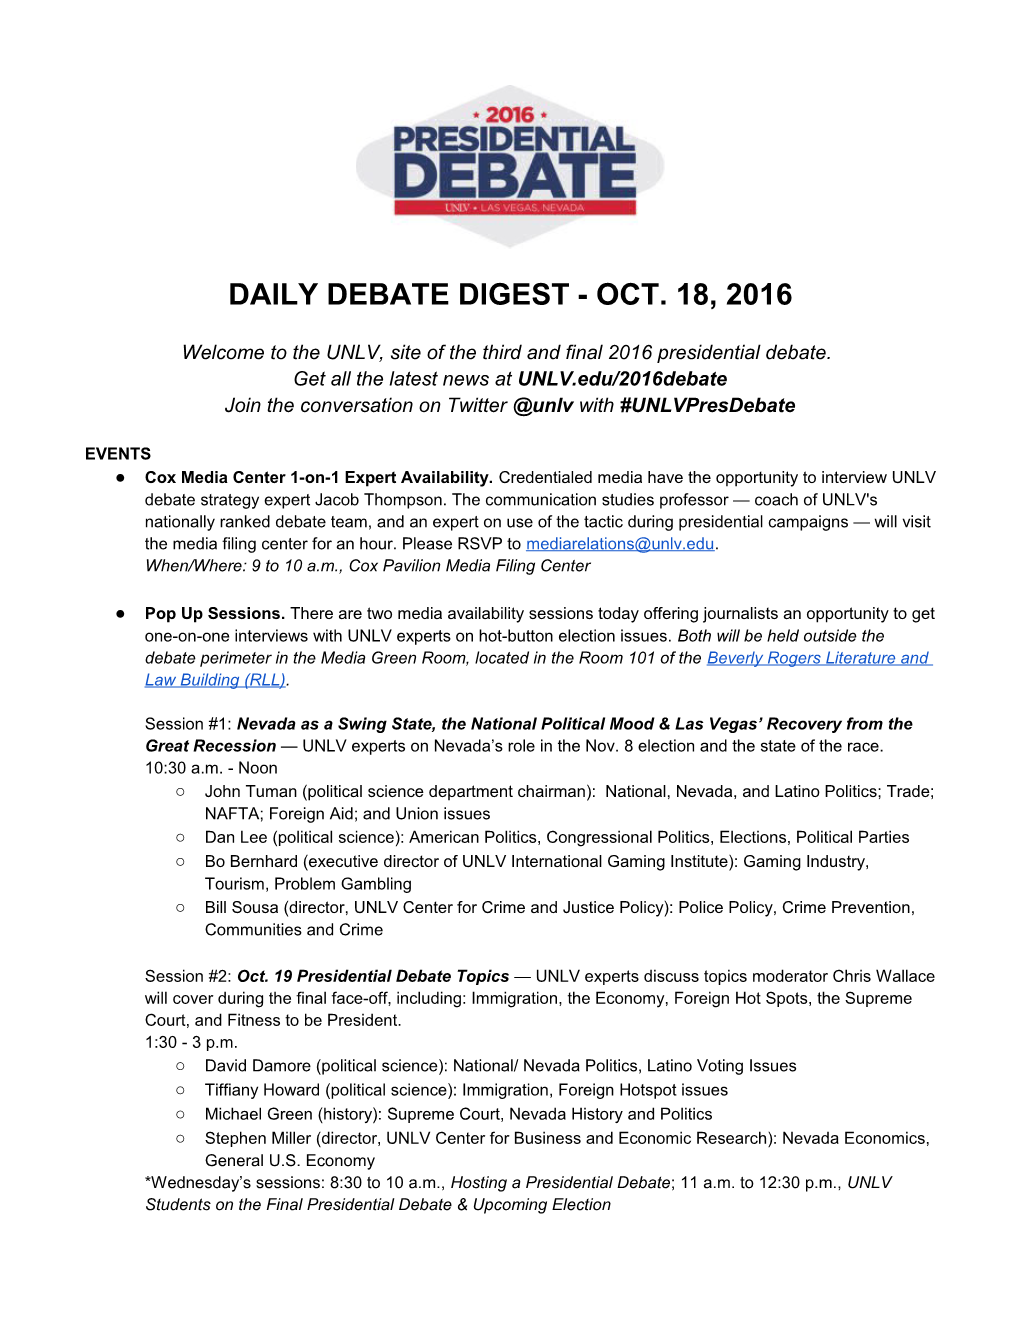 Daily Debate Digest - Oct. 18, 2016